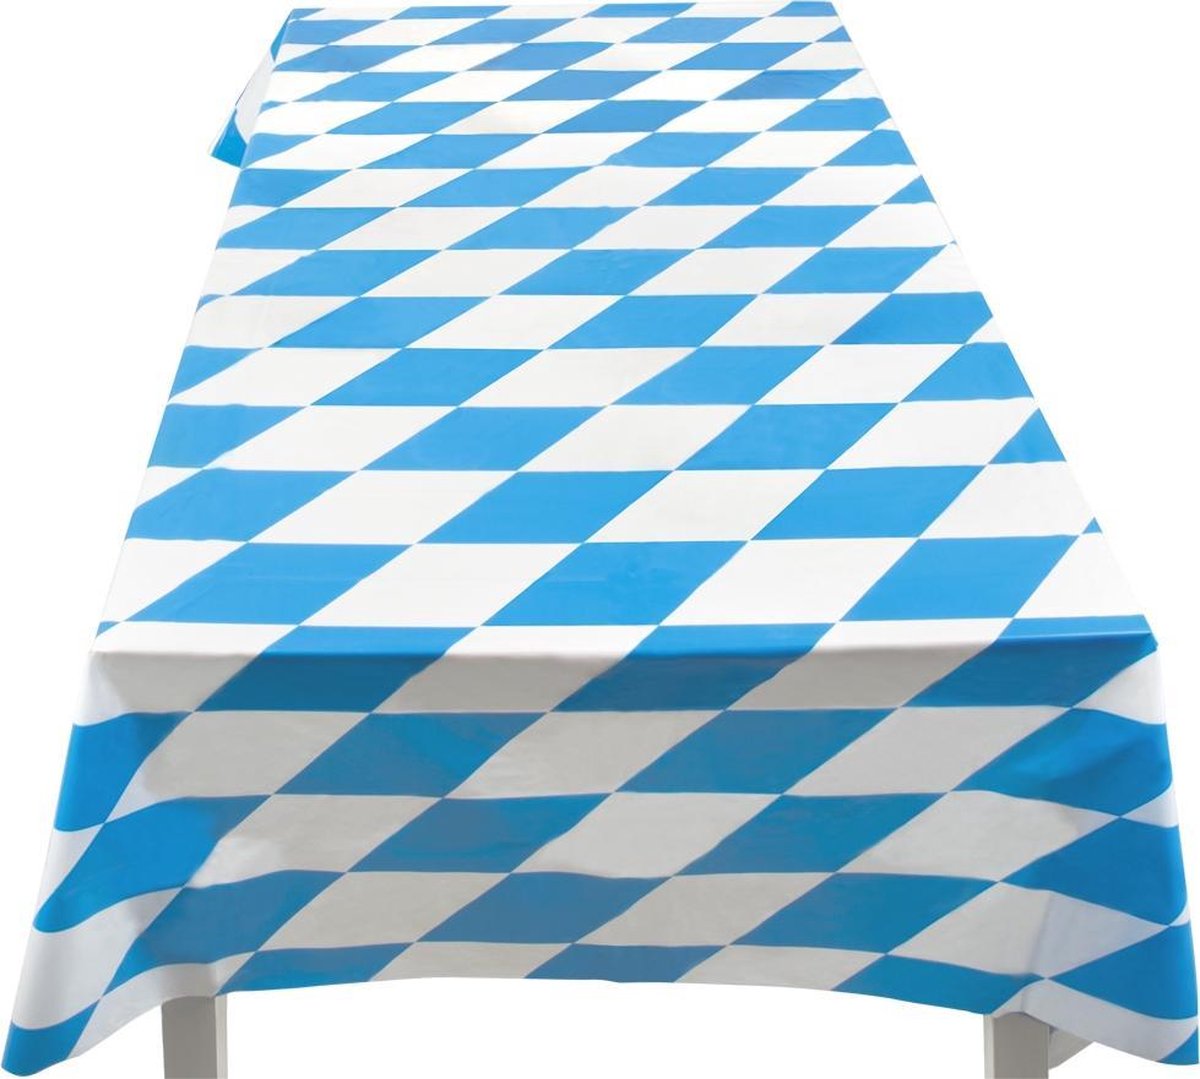 24 stuks: Tafelkleed Bavaria - Ruit - Blauw-Wit - 130x180cm